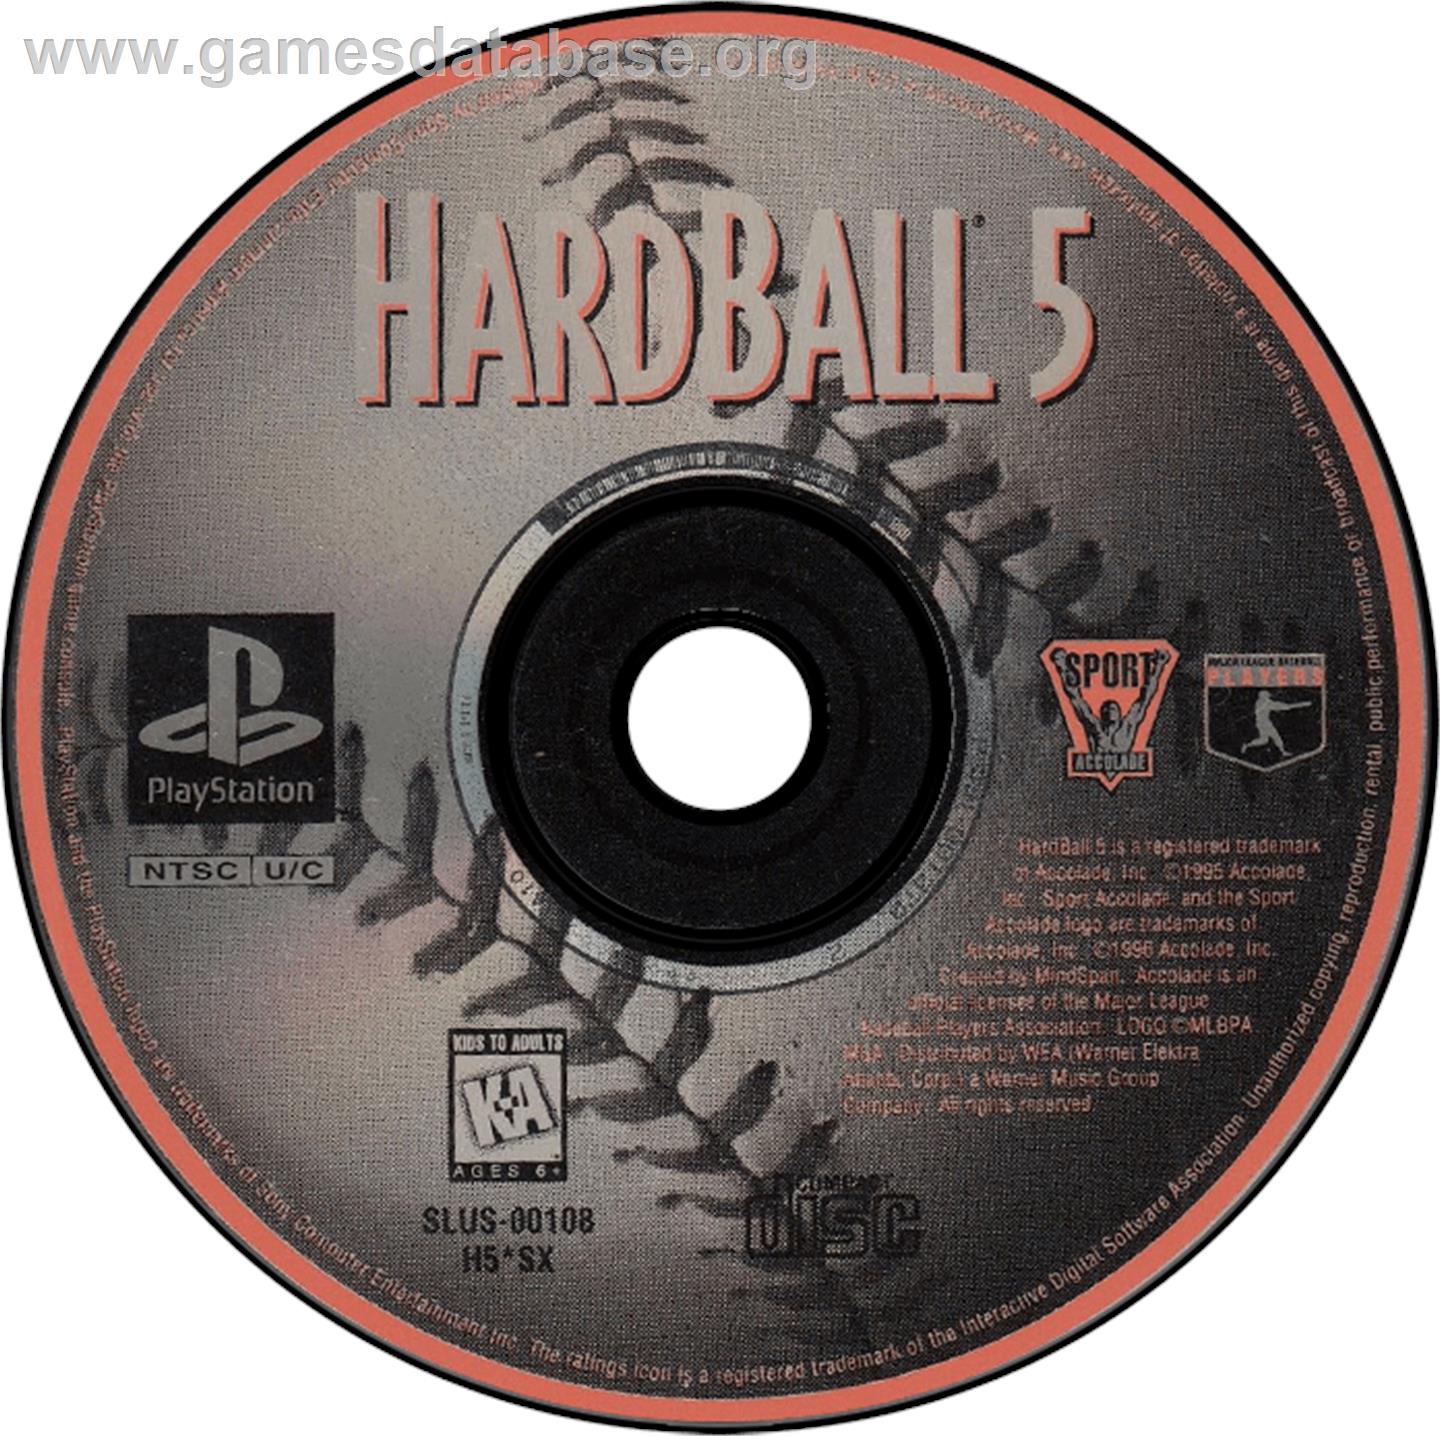 Hardball 5 - Sony Playstation - Artwork - Disc